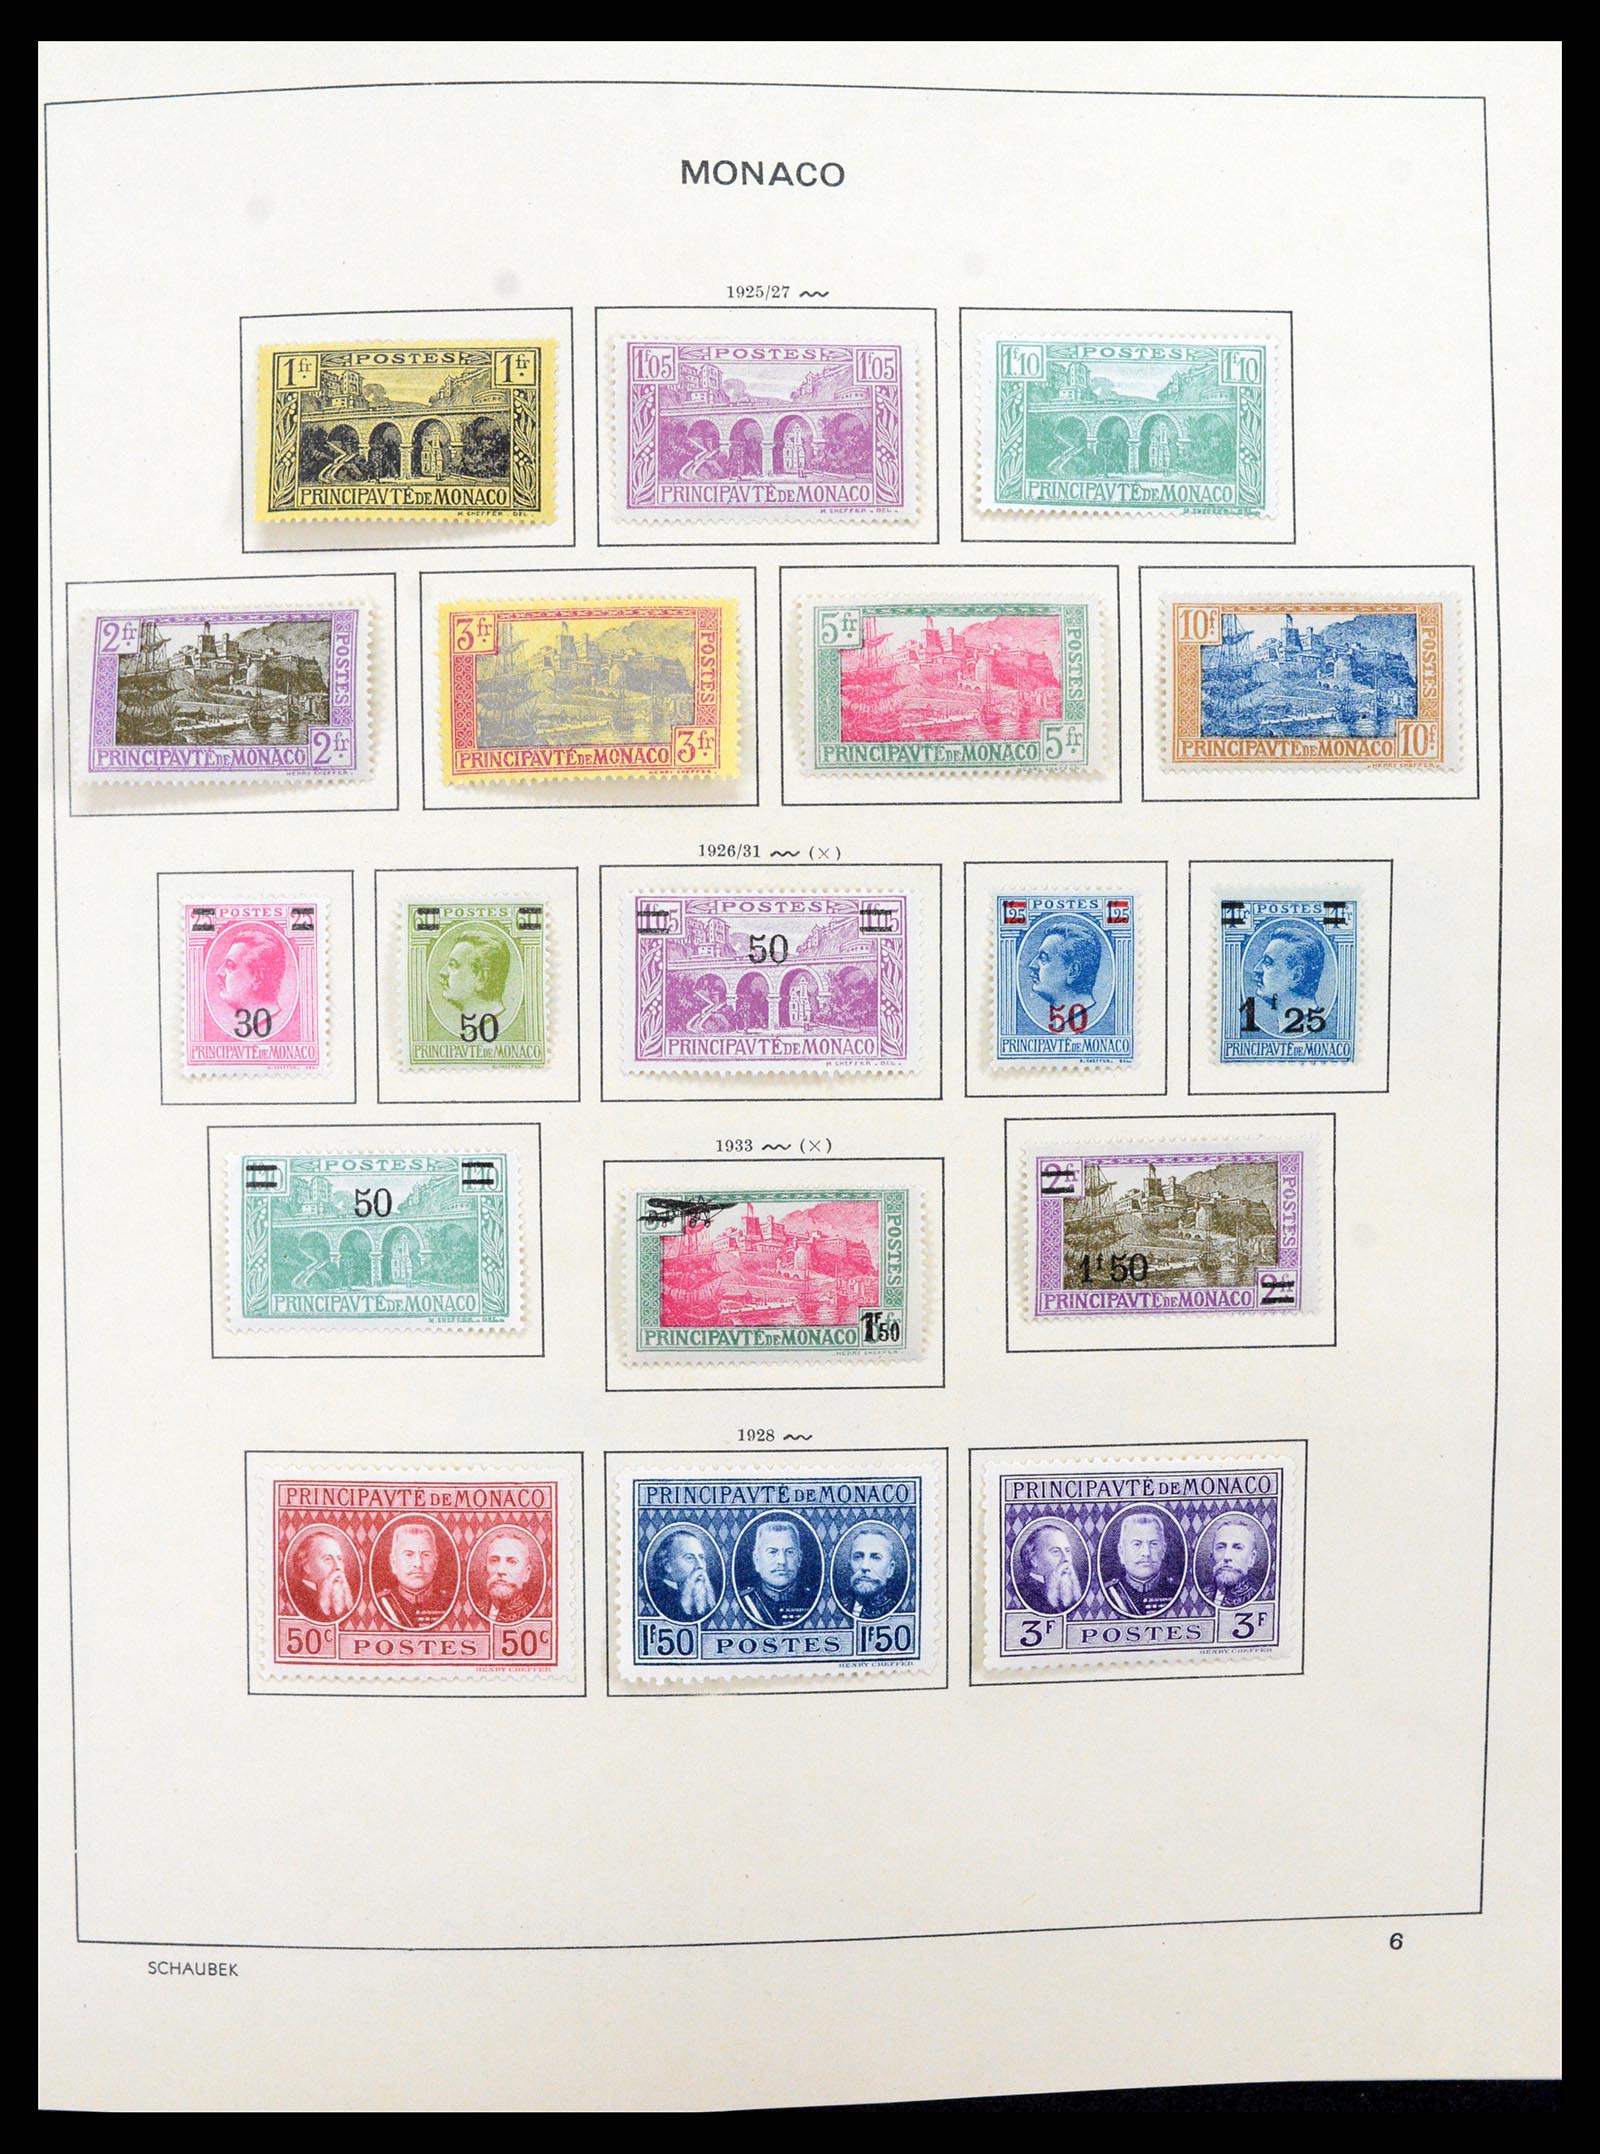 37570 006 - Stamp collection 37570 Monaco 1885-2013.